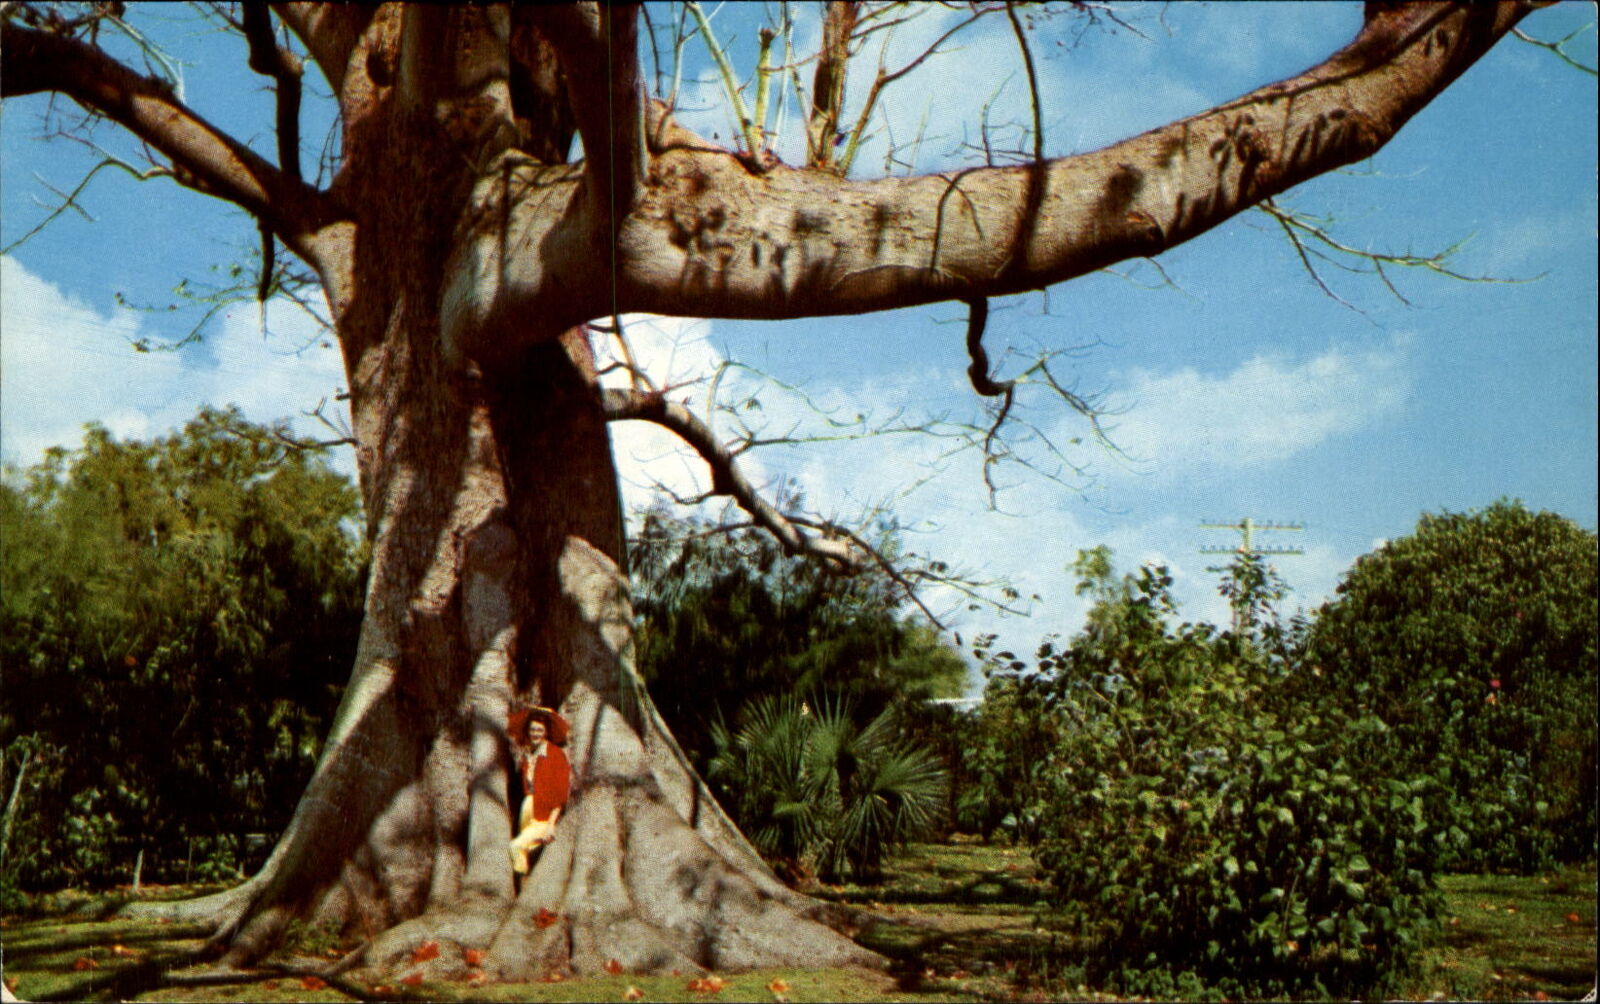 Kapok Tree near Clearwater Florida FL 1960s